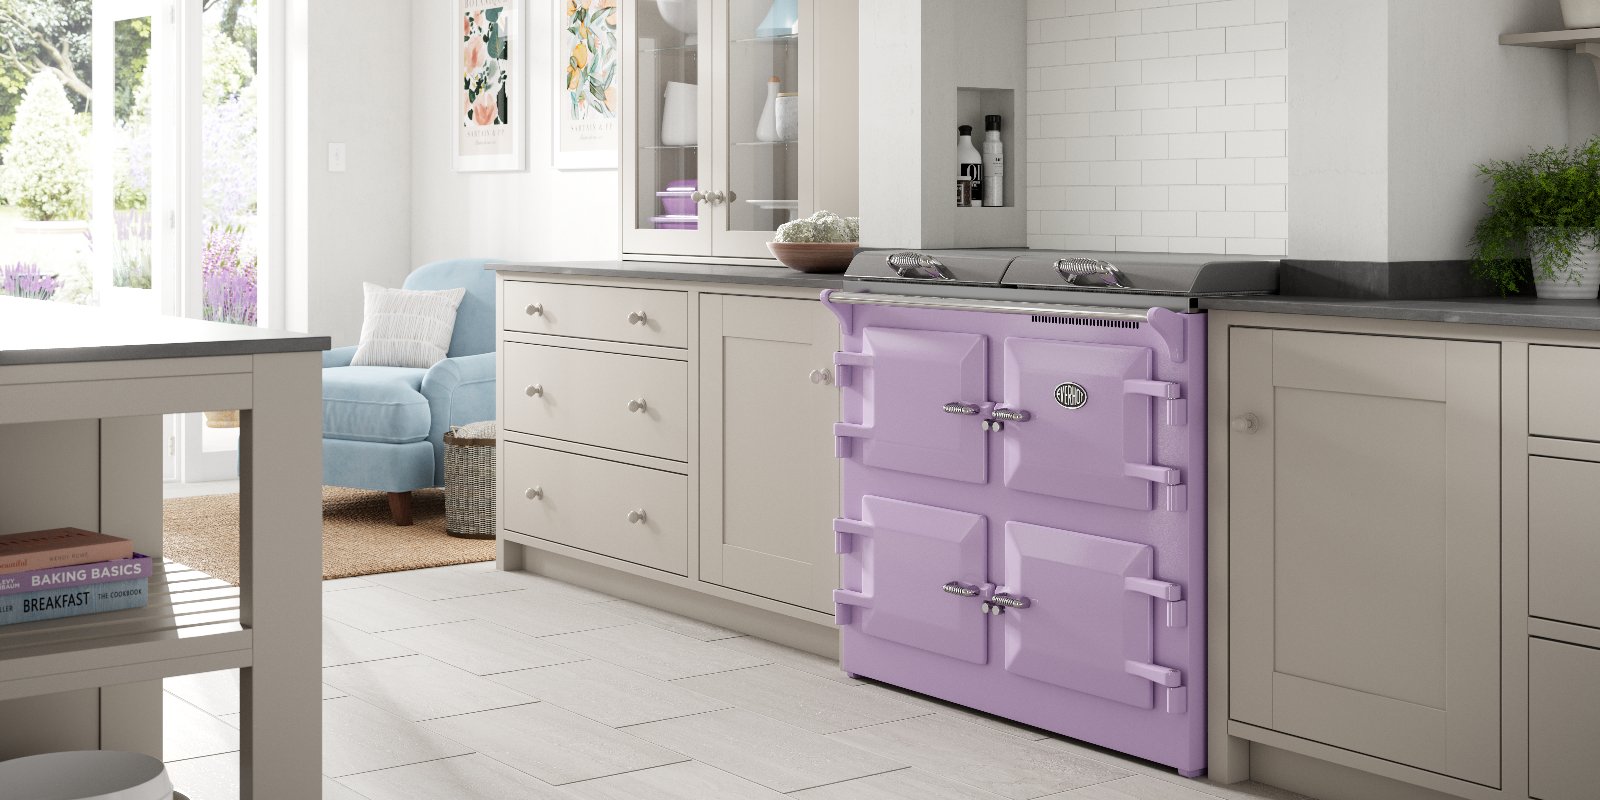 Lavender Everhot cooker in modern Shaker kitchen